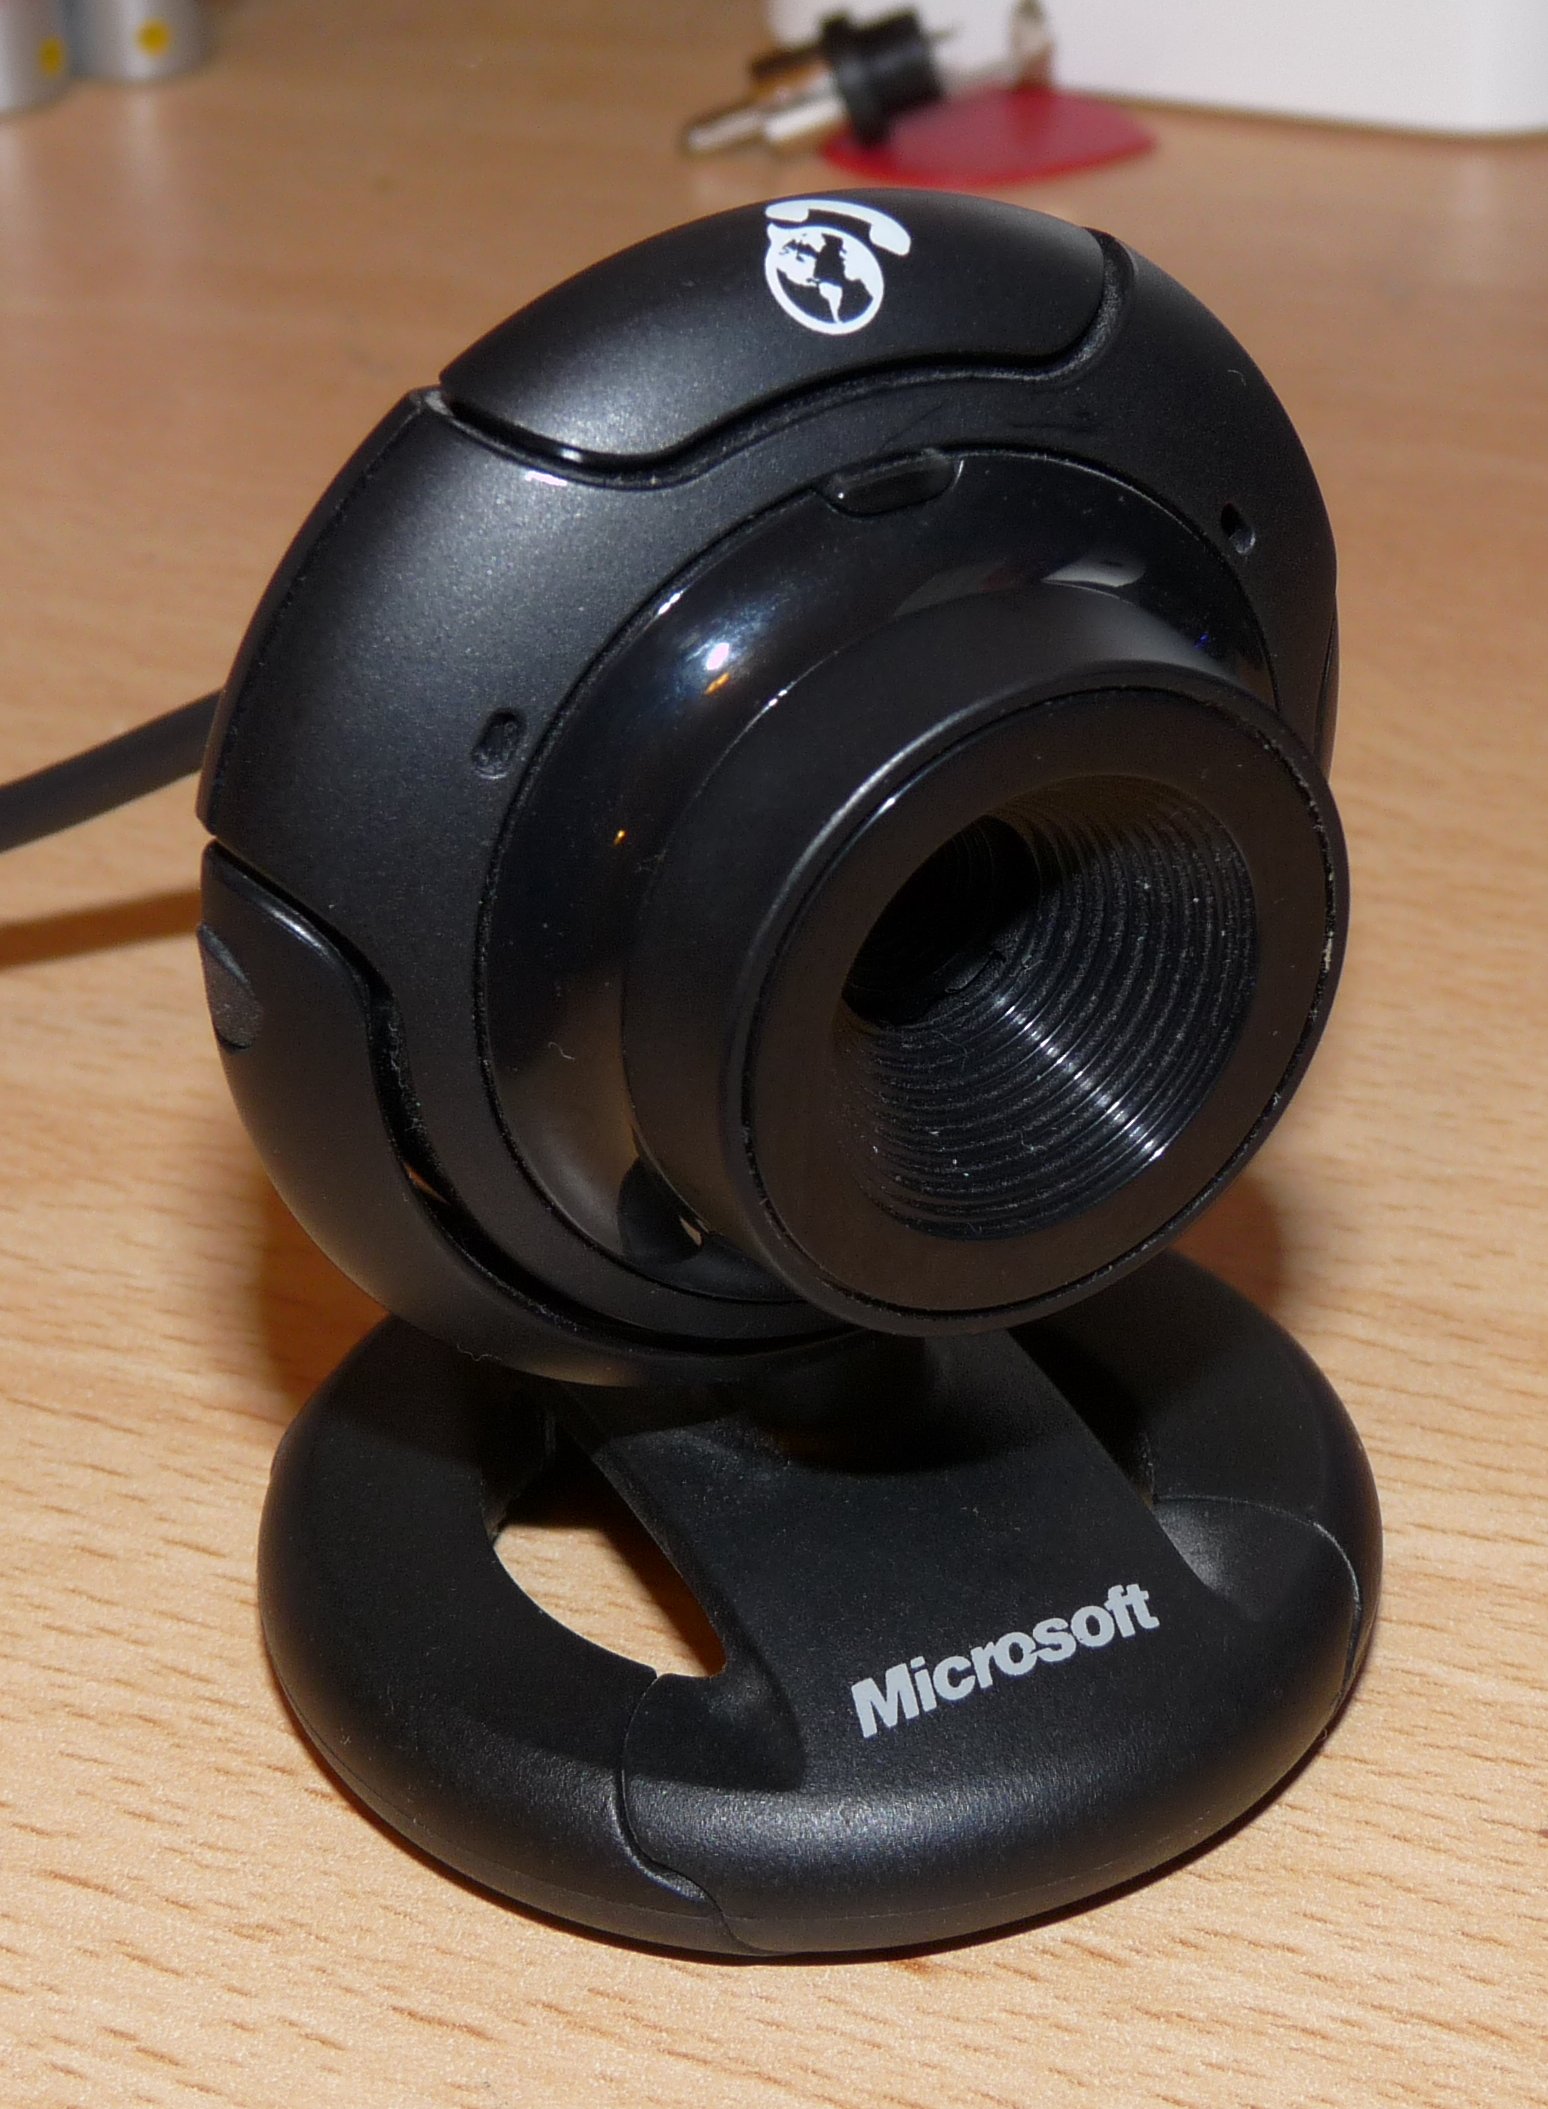 microsoft lifecam hd 6000 software download windows 10